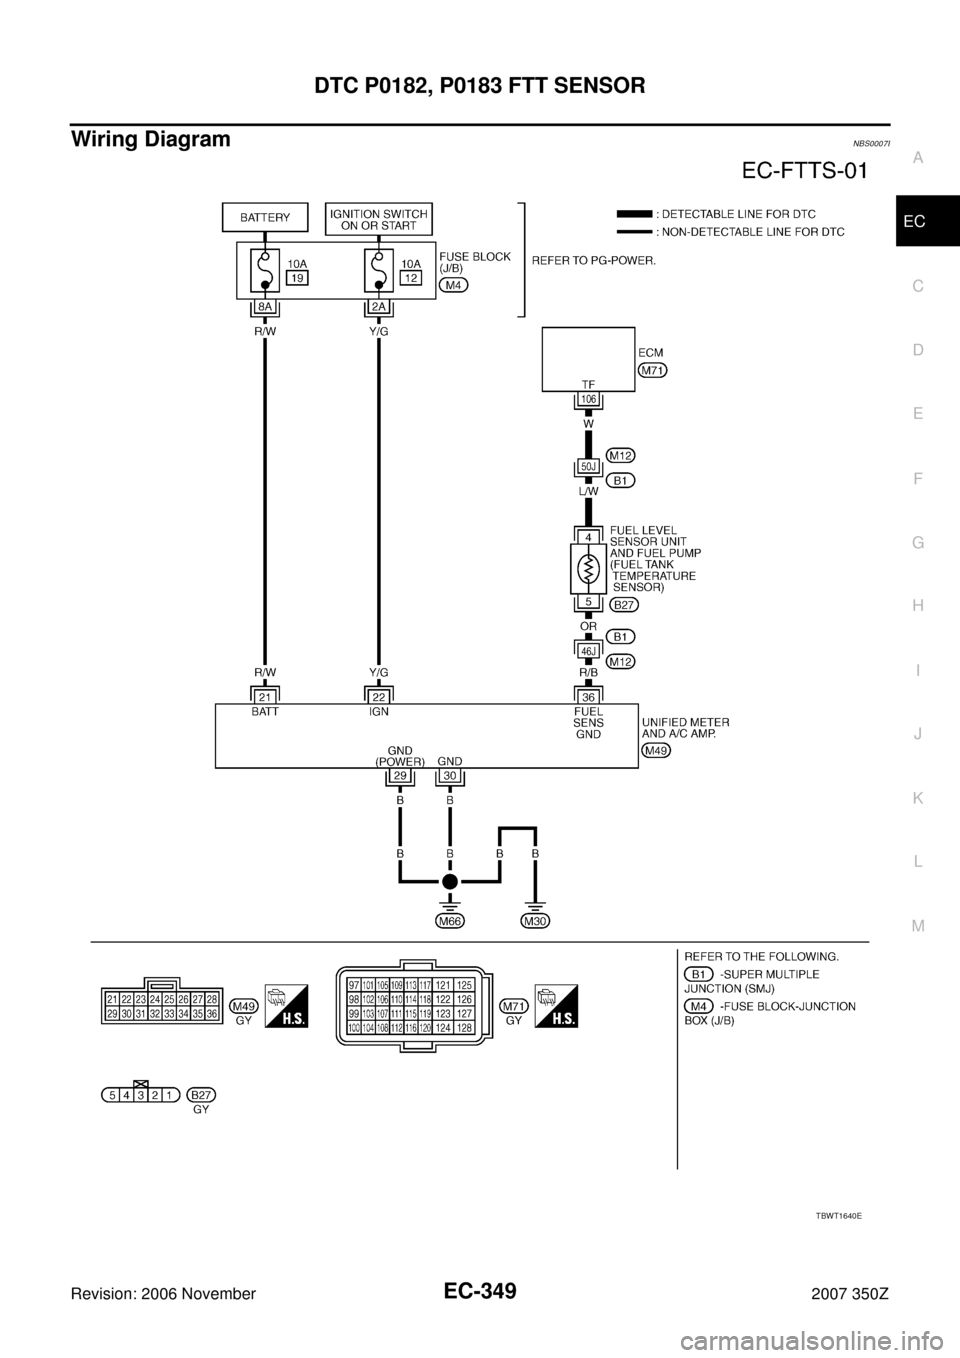 NISSAN 350Z 2007 Z33 Engine Control Workshop Manual DTC P0182, P0183 FTT SENSOR
EC-349
C
D
E
F
G
H
I
J
K
L
MA
EC
Revision: 2006 November2007 350Z
Wiring DiagramNBS0007I
TBWT1640E 